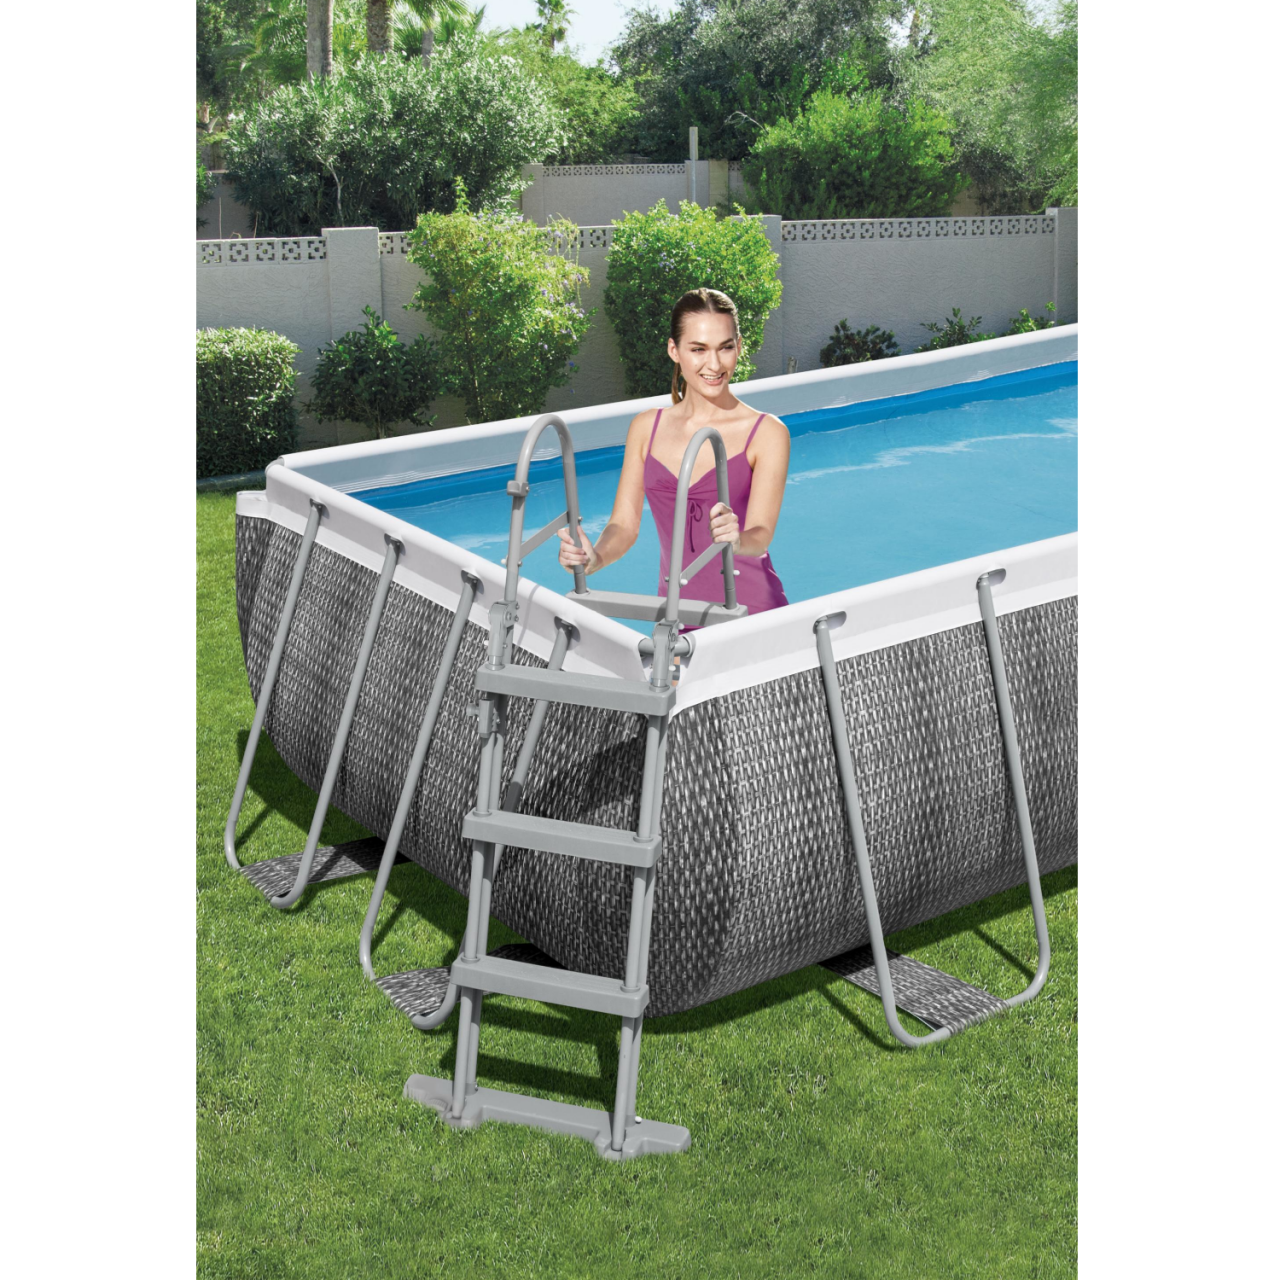 Bestway 56721 Frame Pool Power Steel Swimmingpool 404x201x100cm Komplett-Set